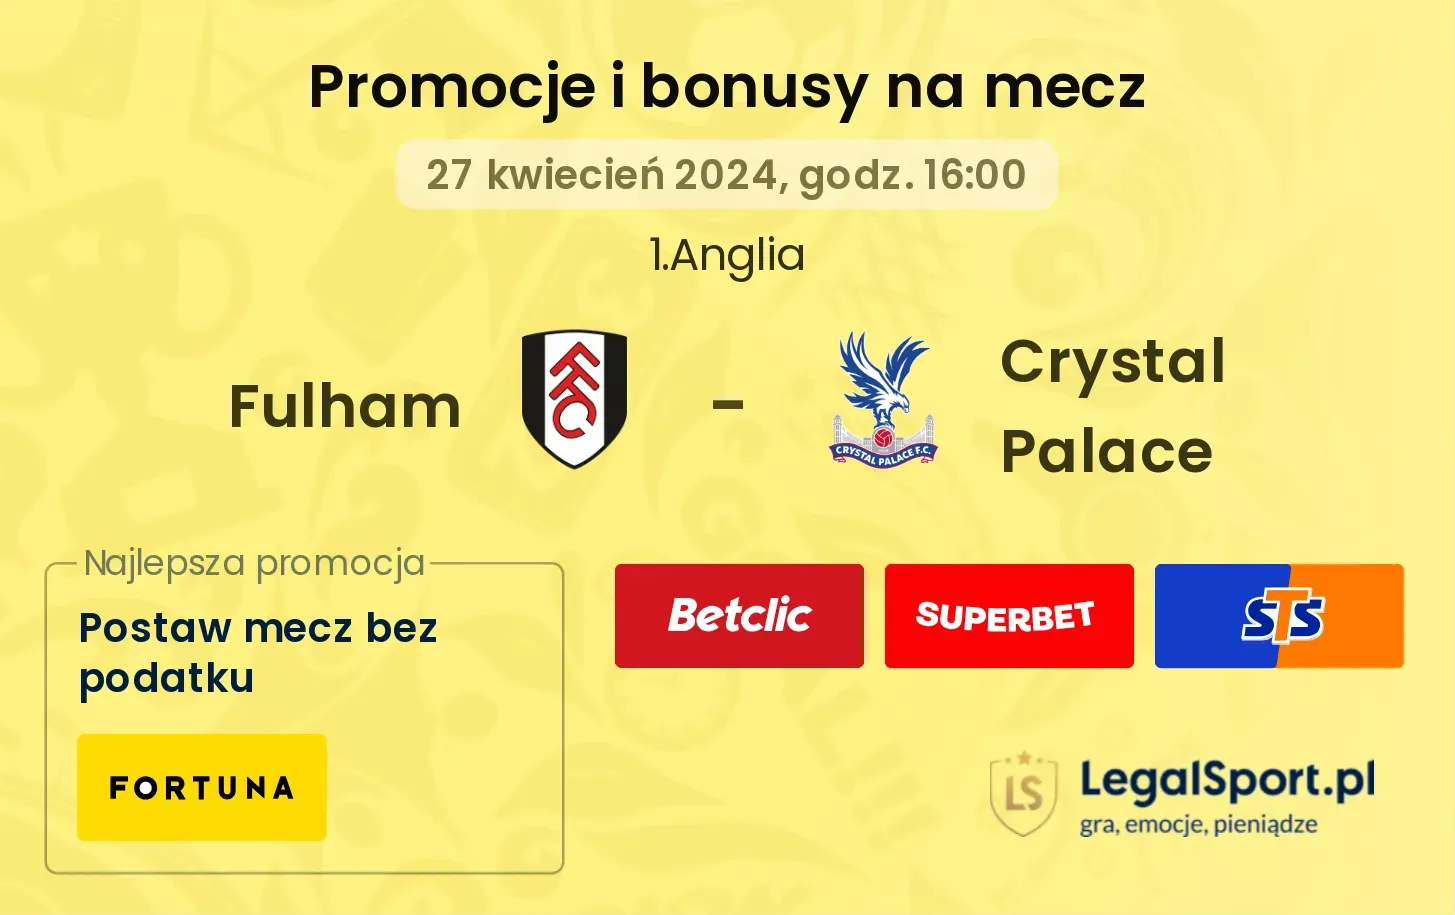 Fulham - Crystal Palace promocje bonusy na mecz